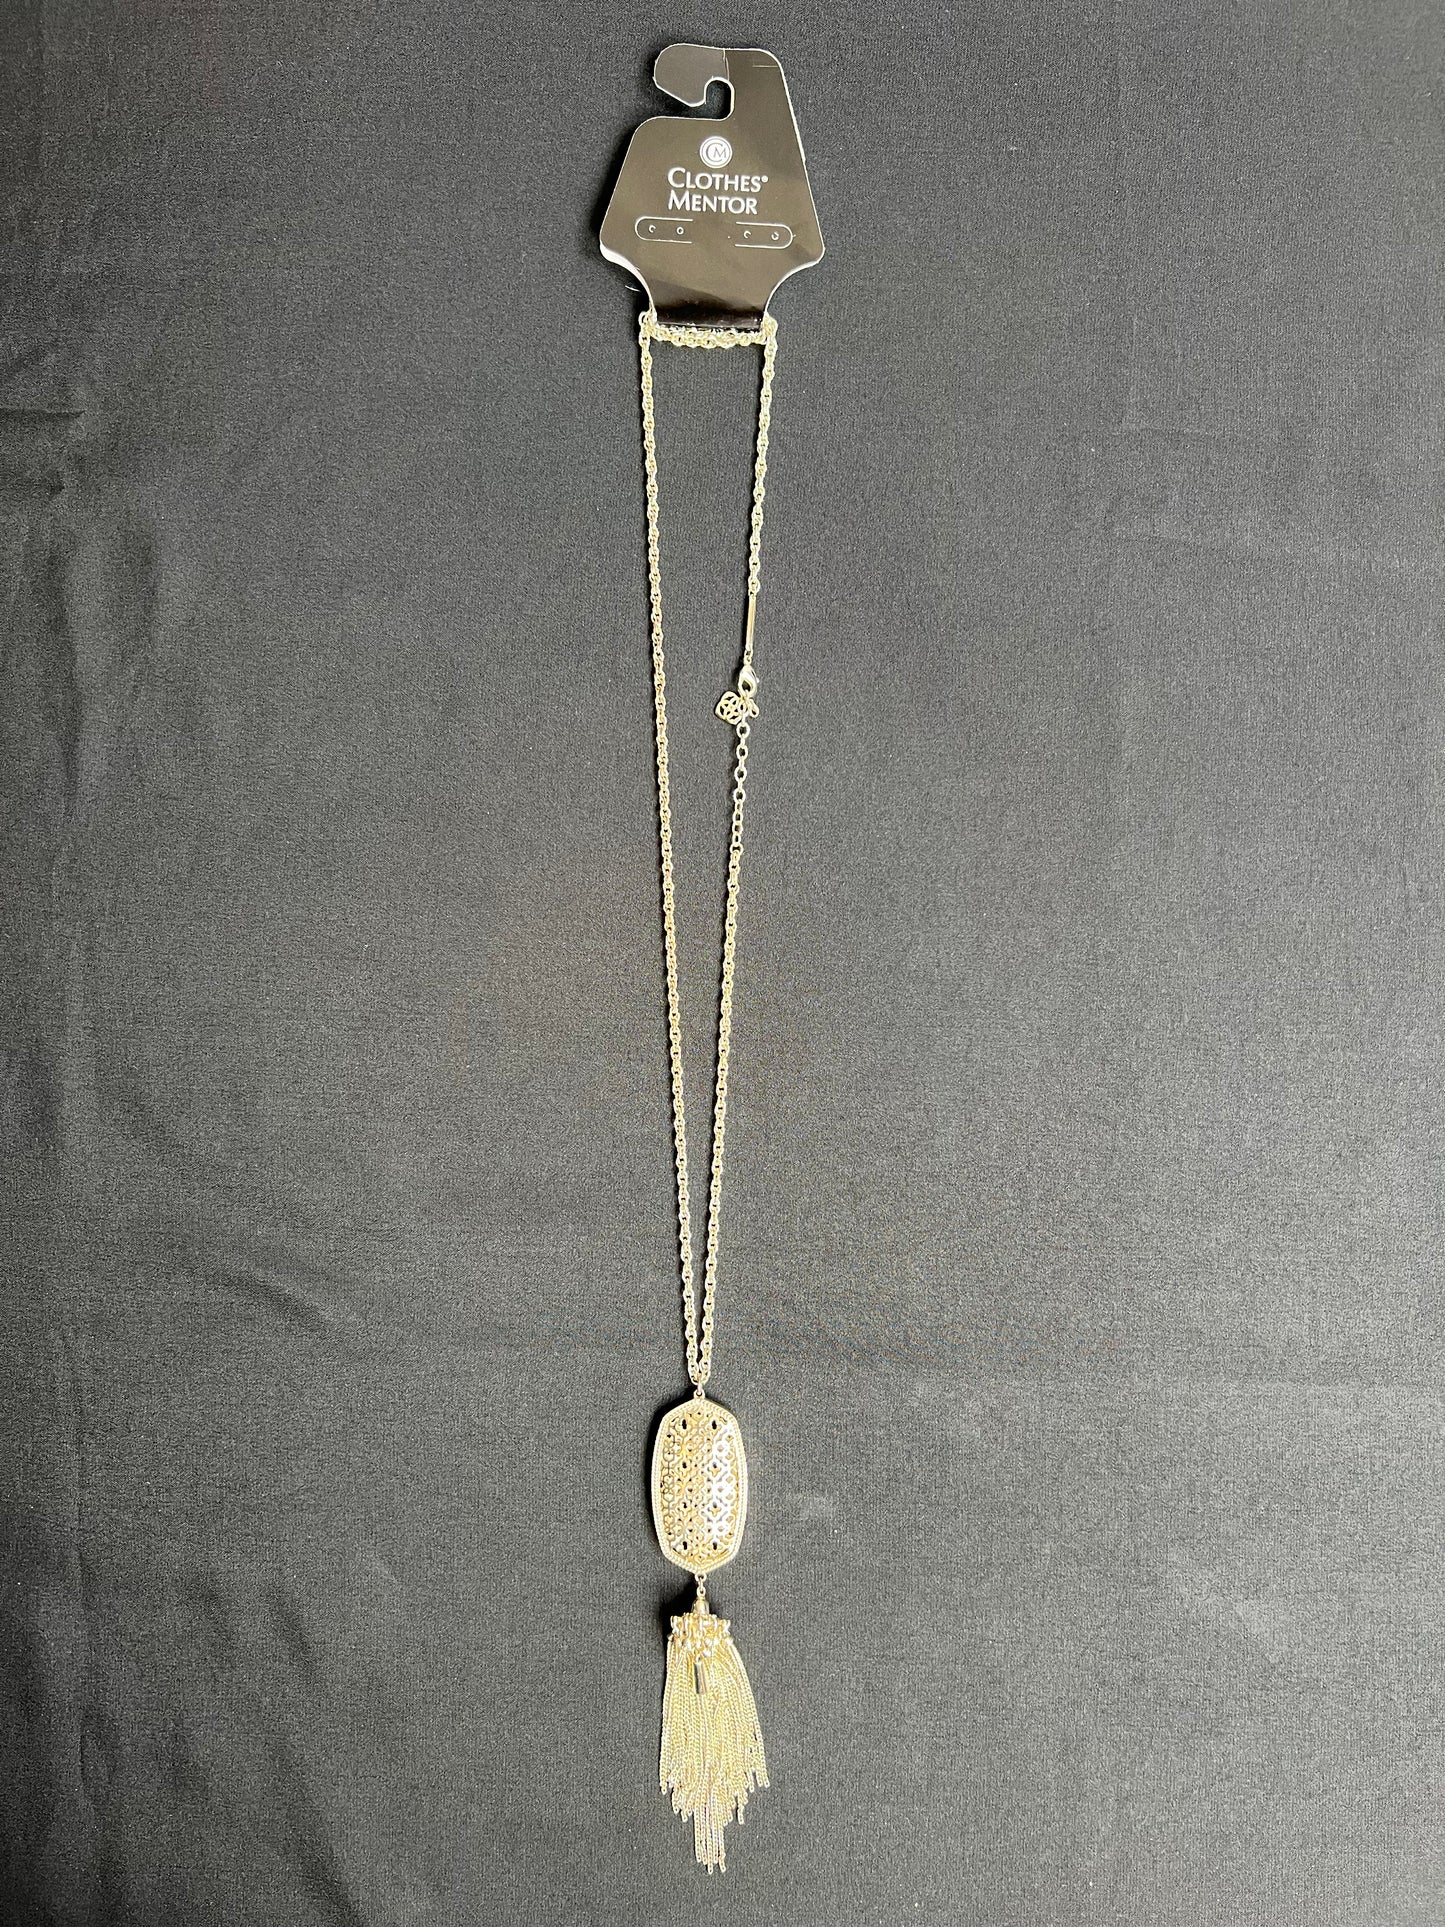 Necklace Pendant By Kendra Scott  Size: 1